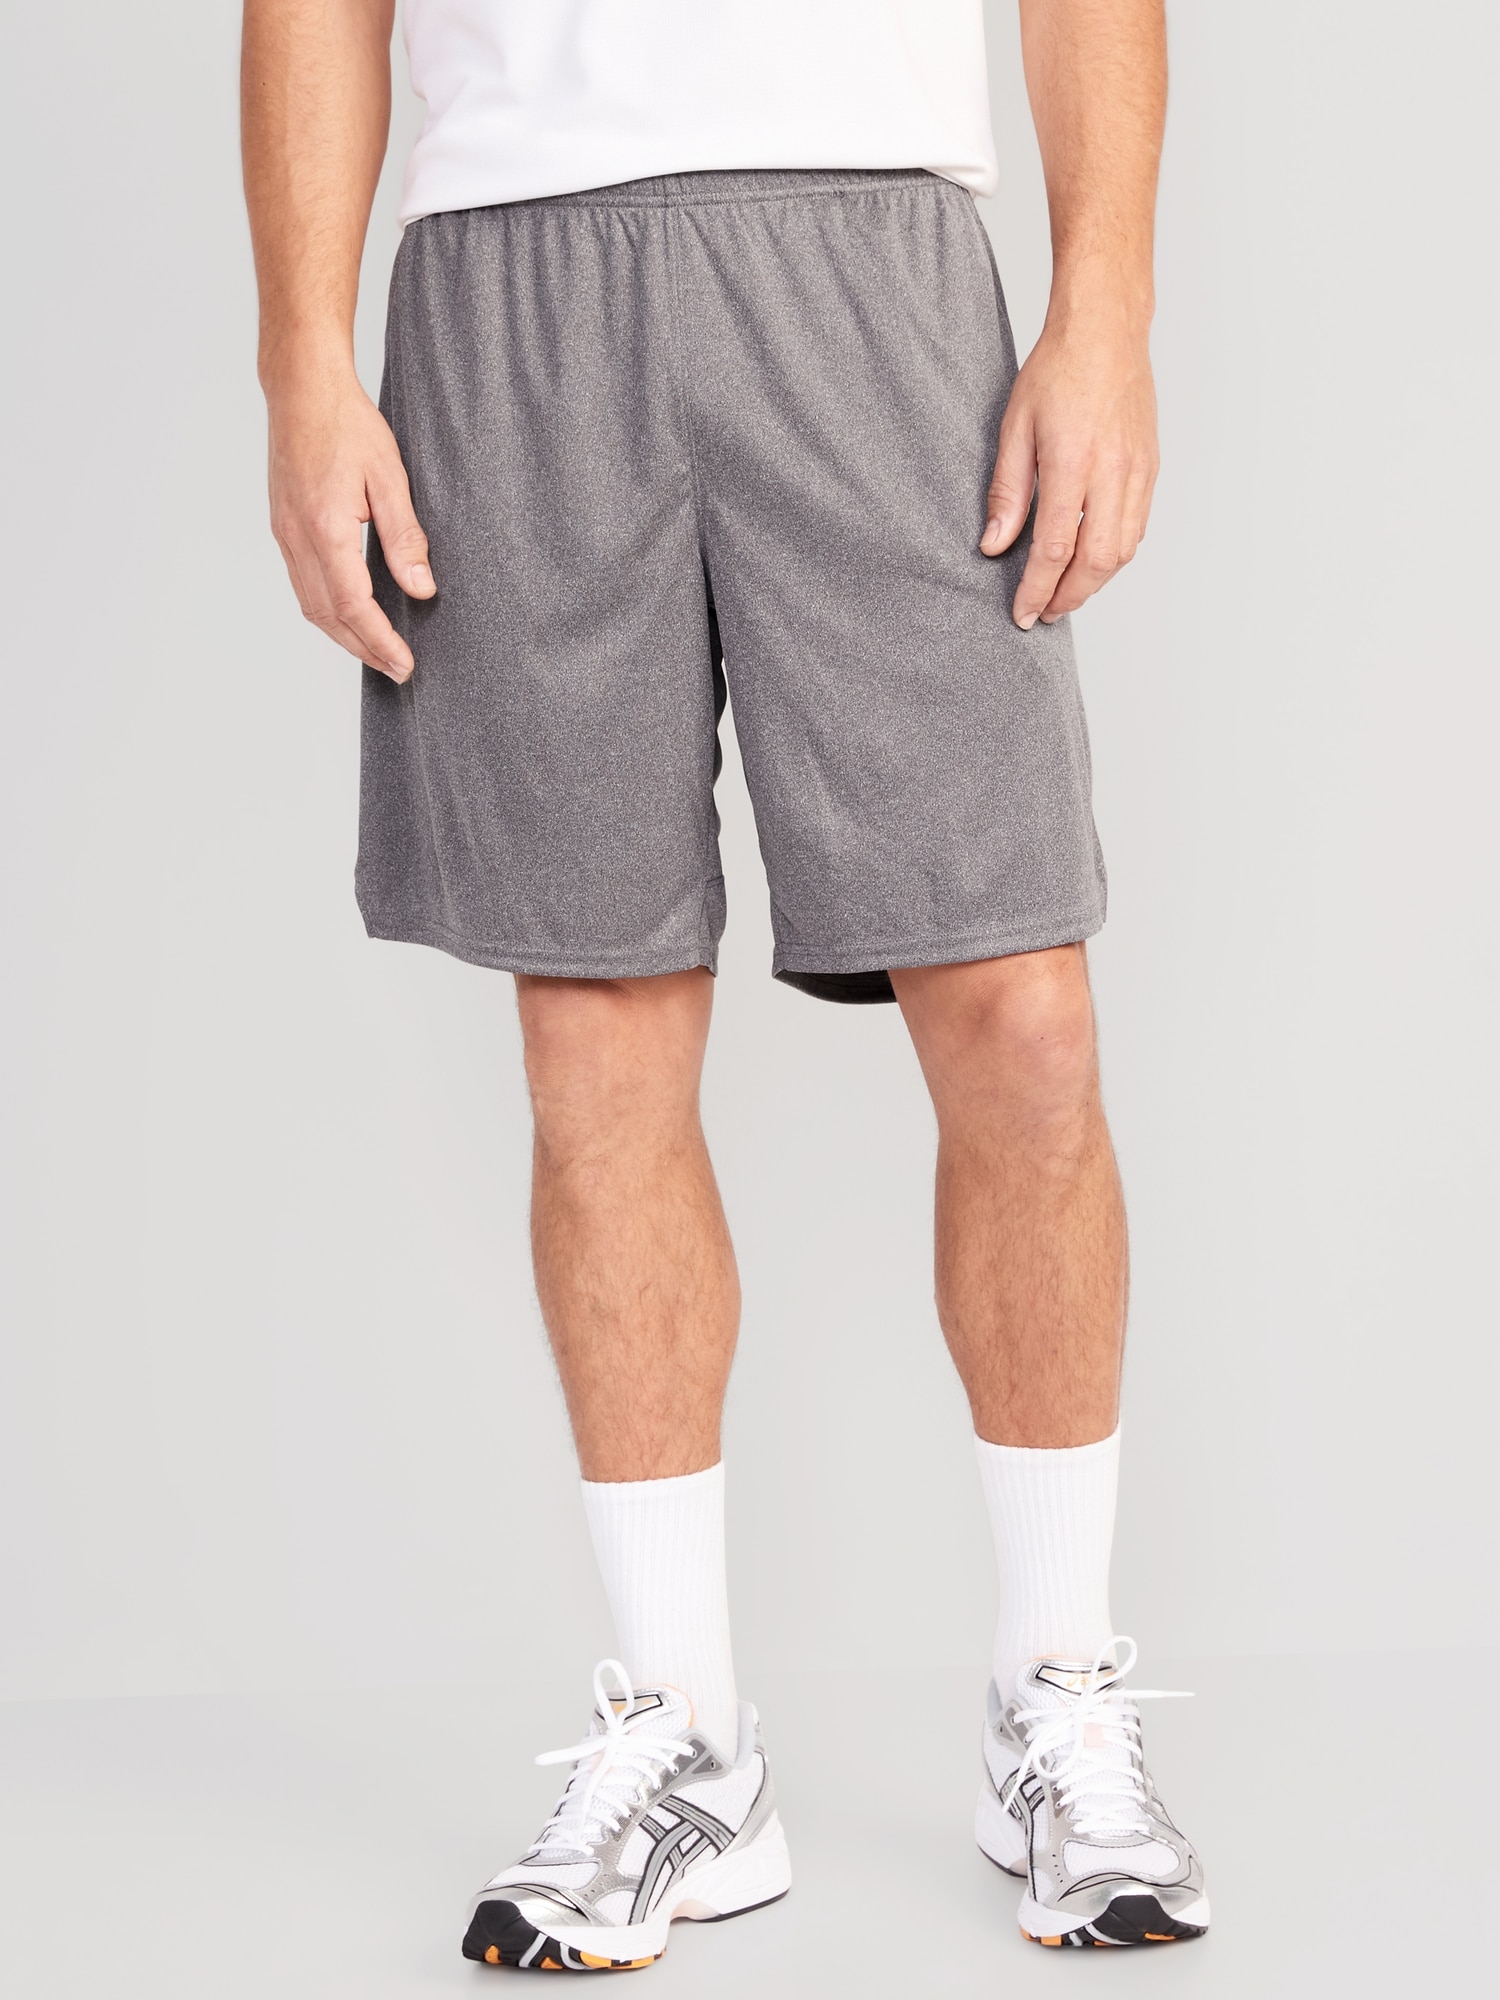 Go-Dry Mesh Basketball Shorts for Men -- 9-inch inseam | Old Navy